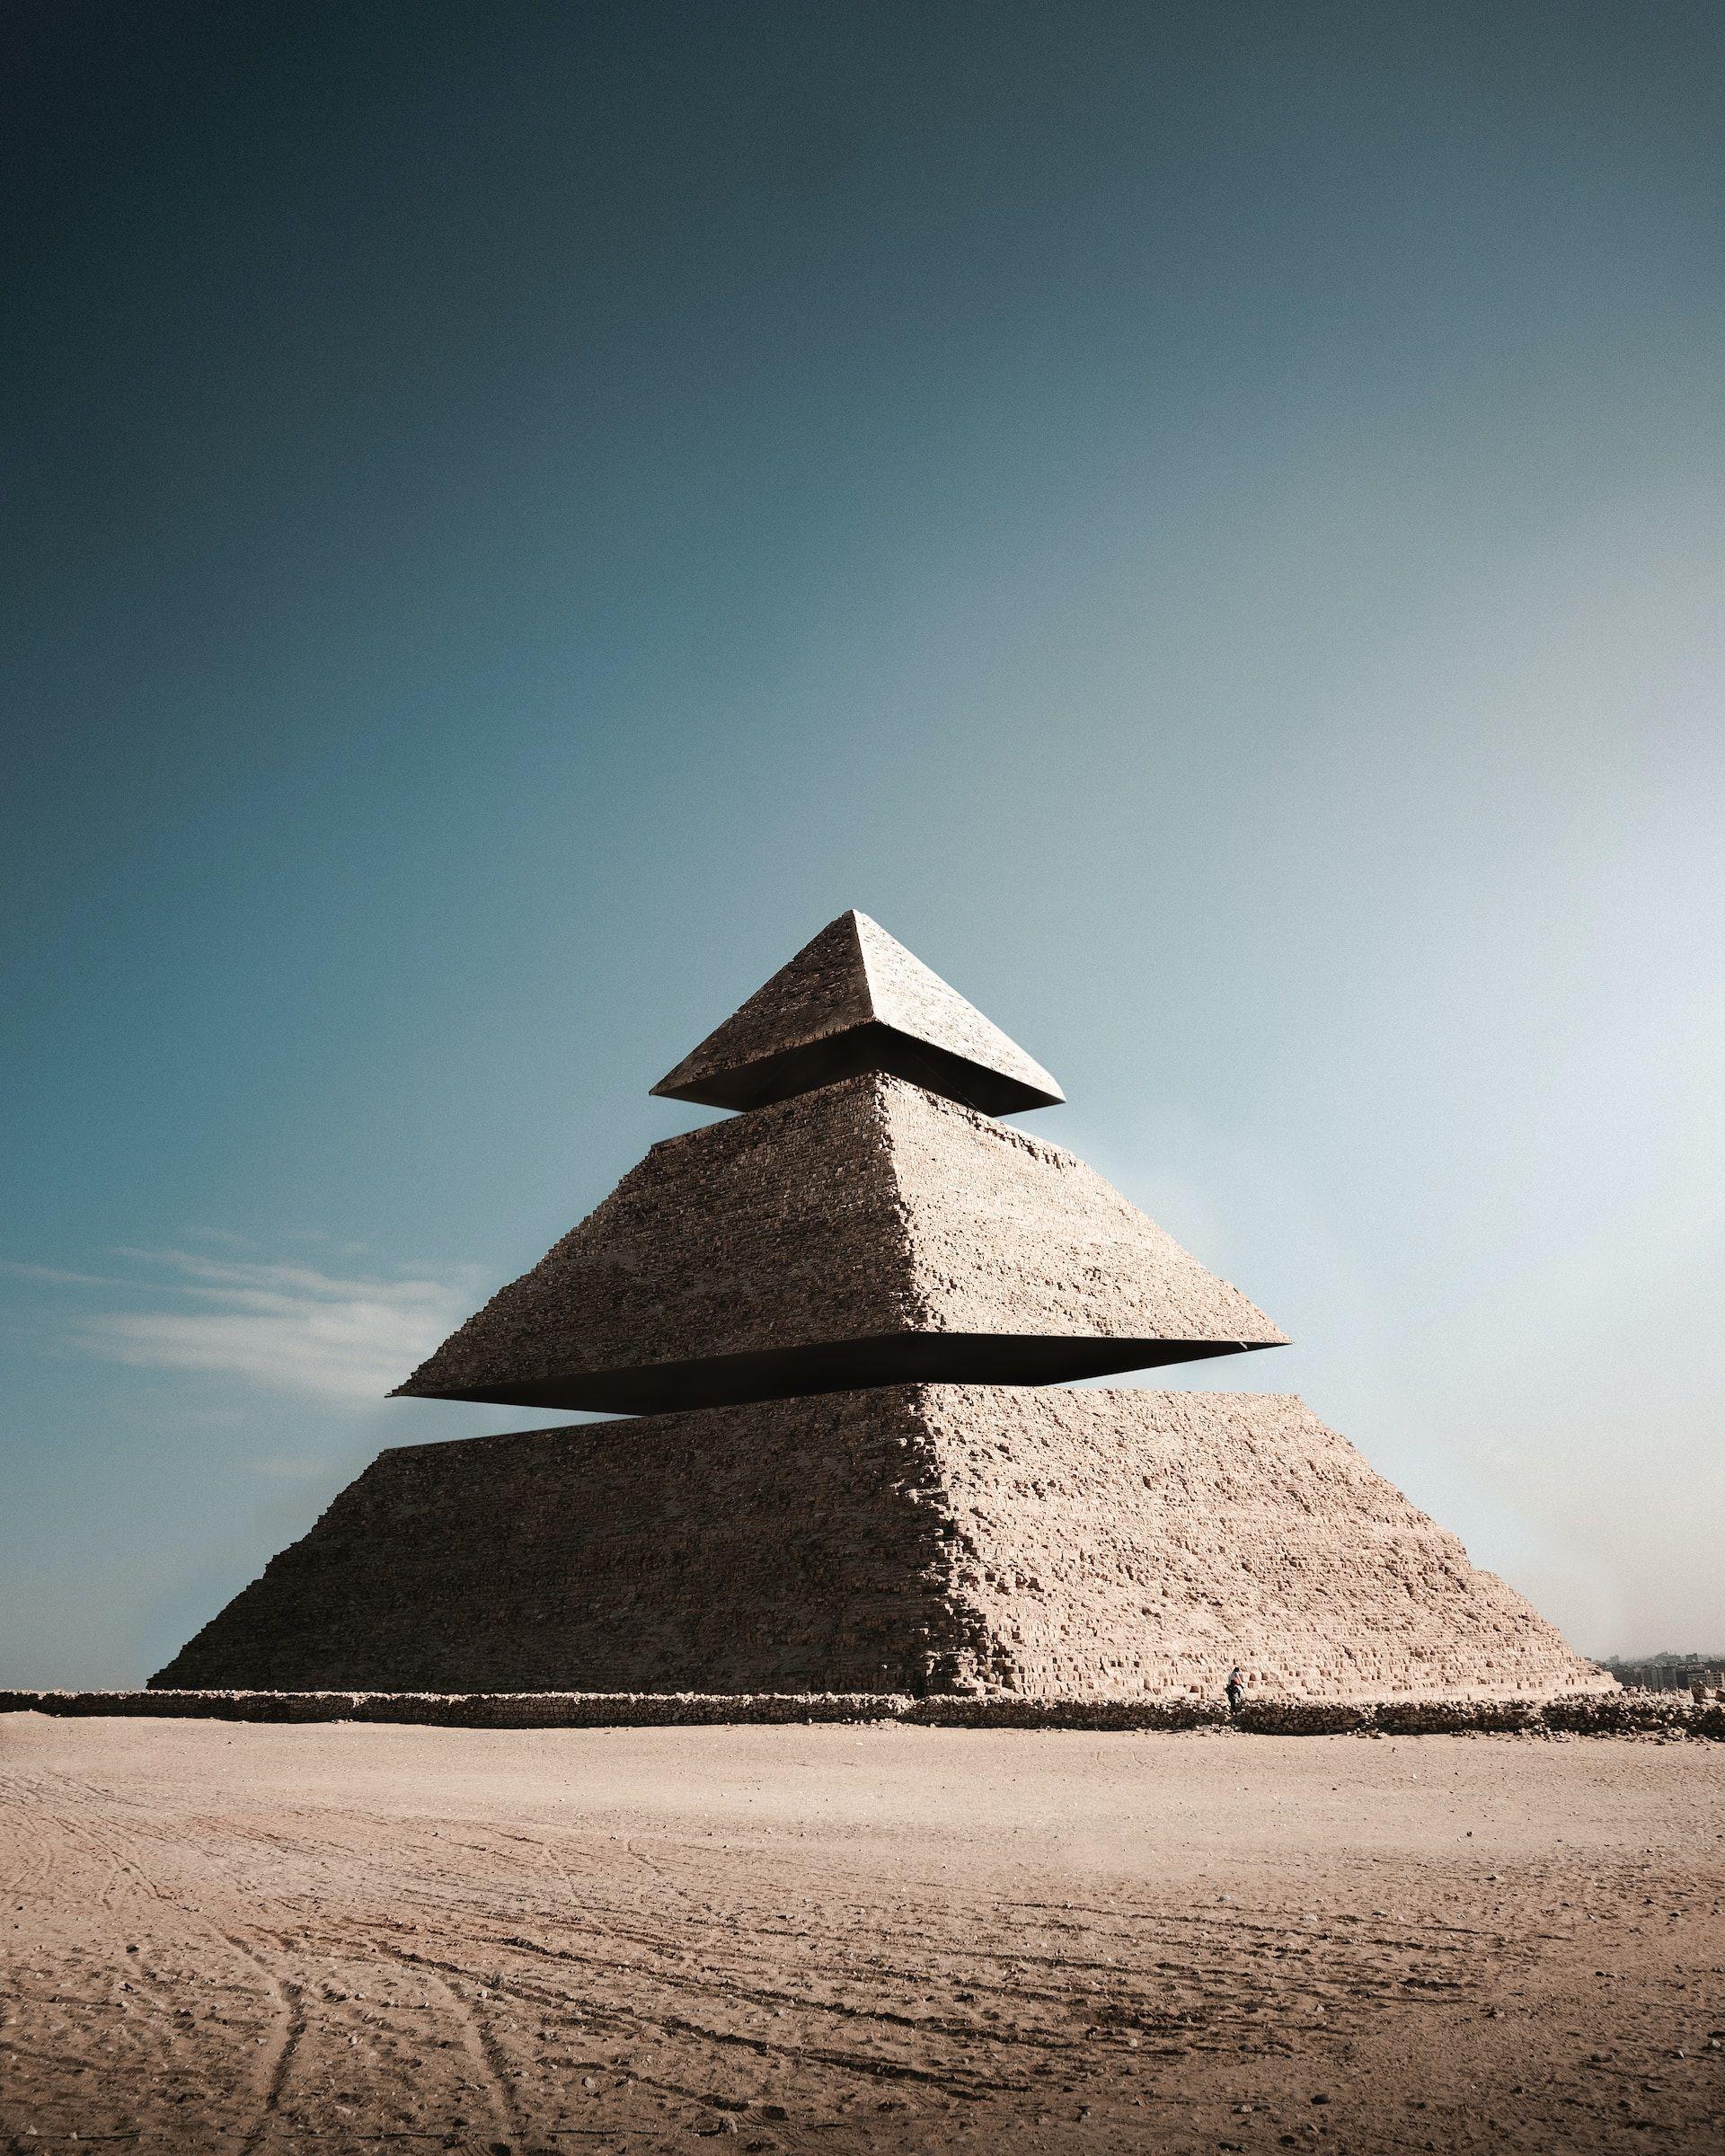 image of a pyramid